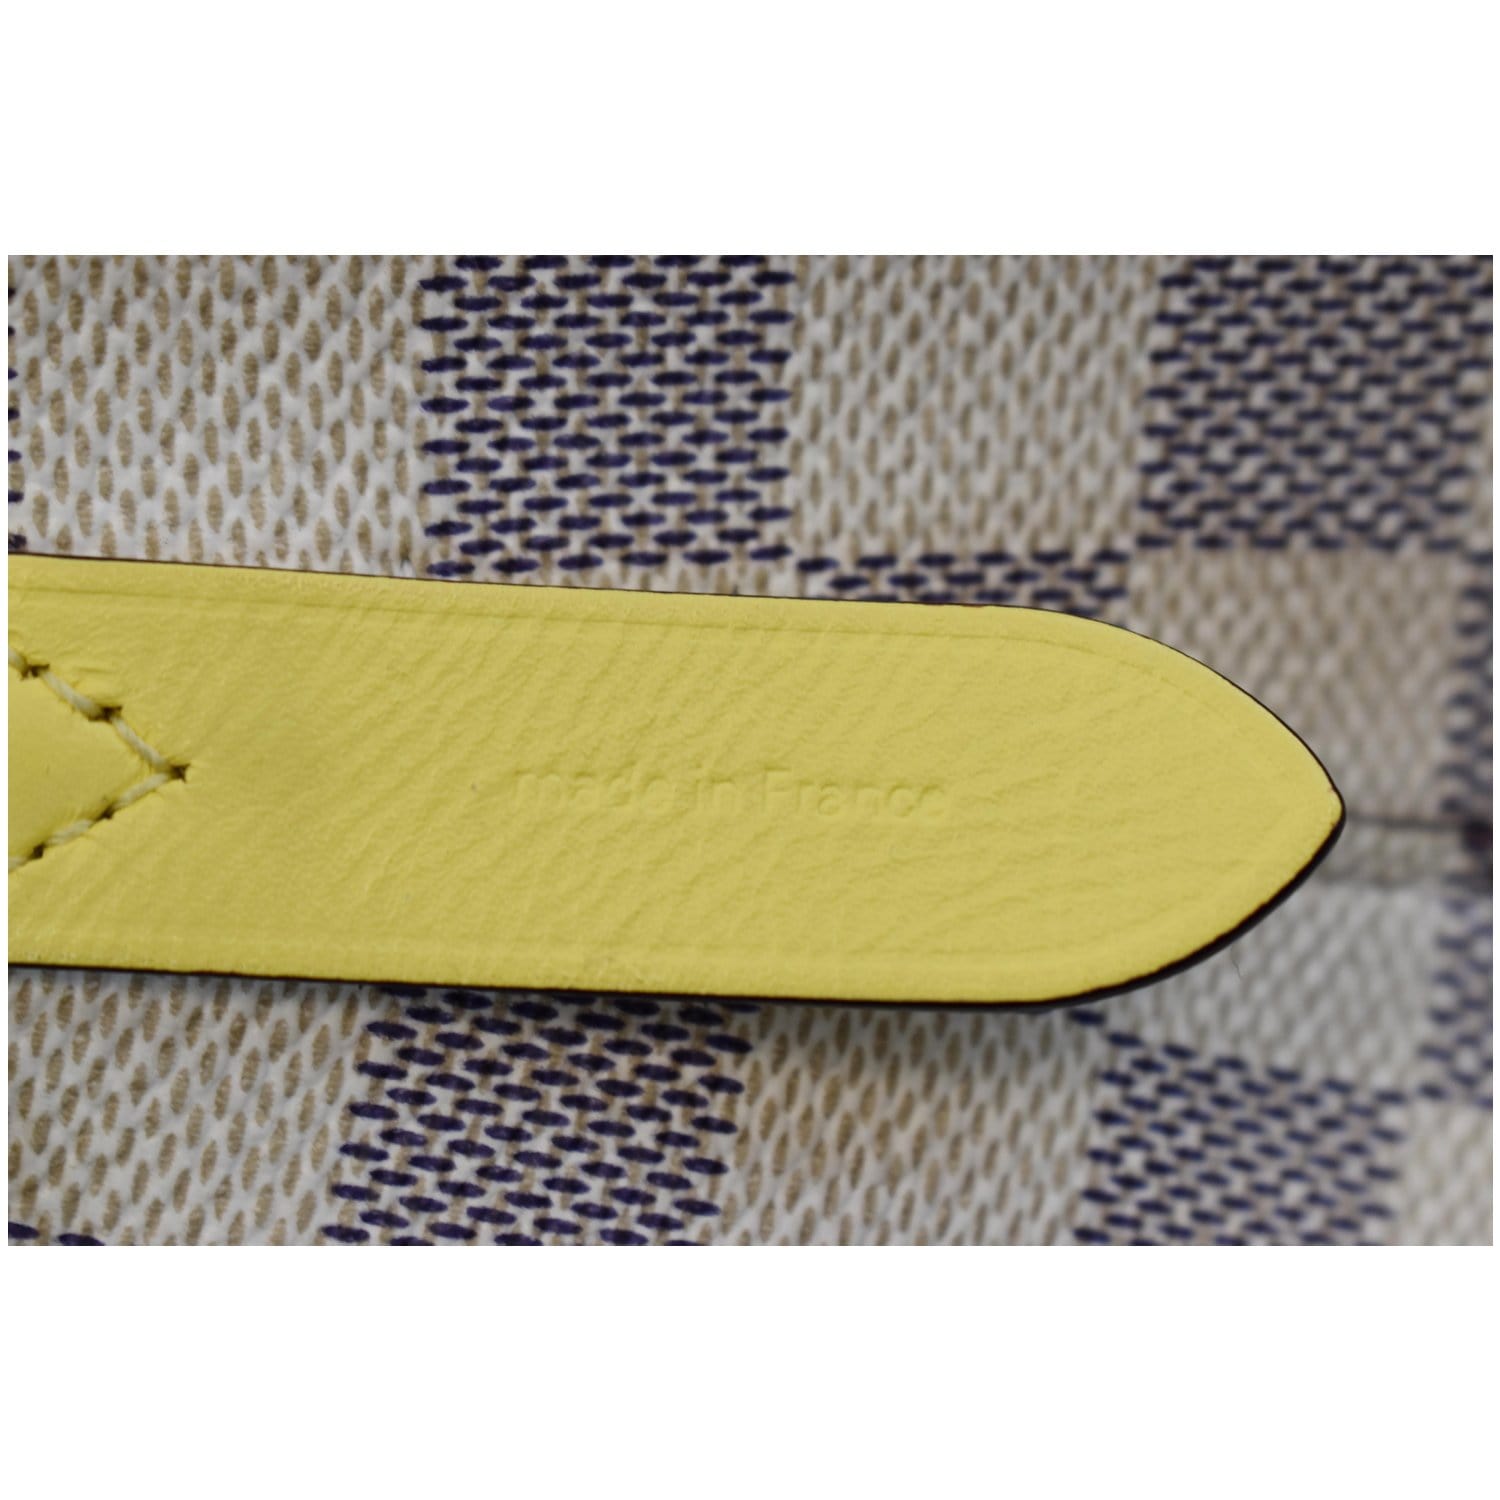 Louis Vuitton Neonoe N40151 Damier Azur Pineapple Yellow Shoulder